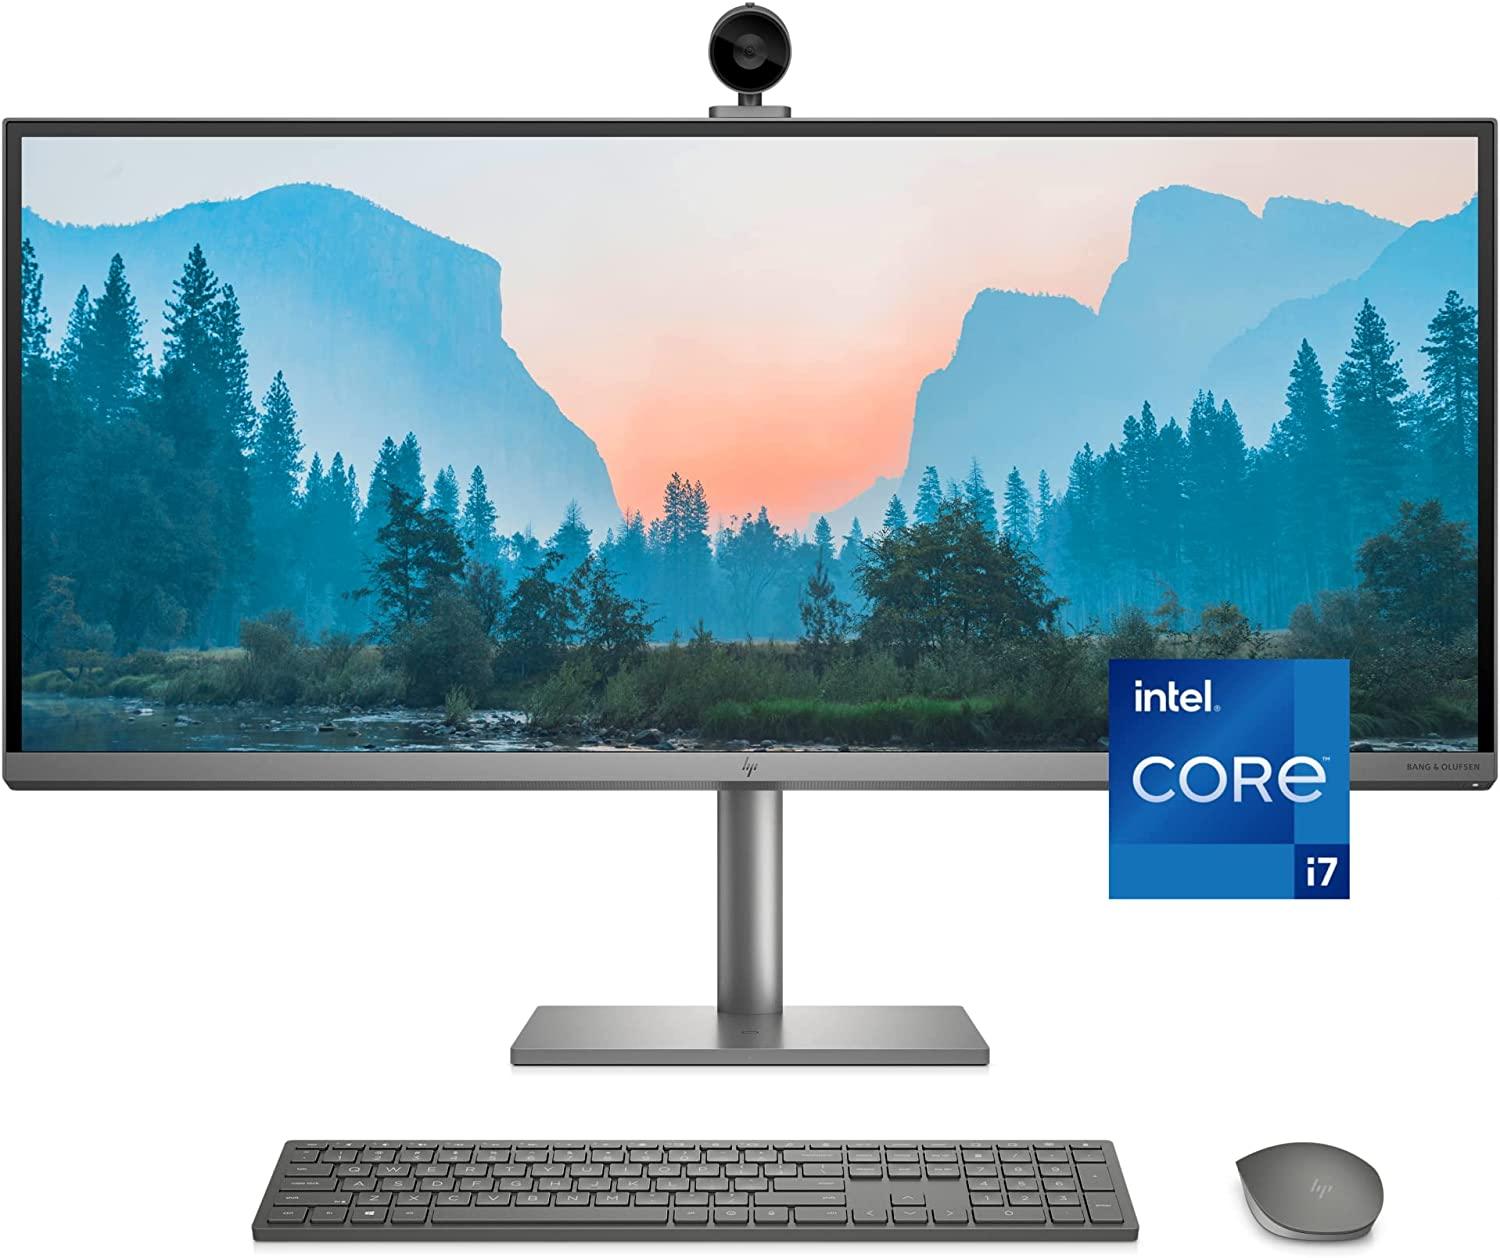 HP Envy 34” all-in-one desktop